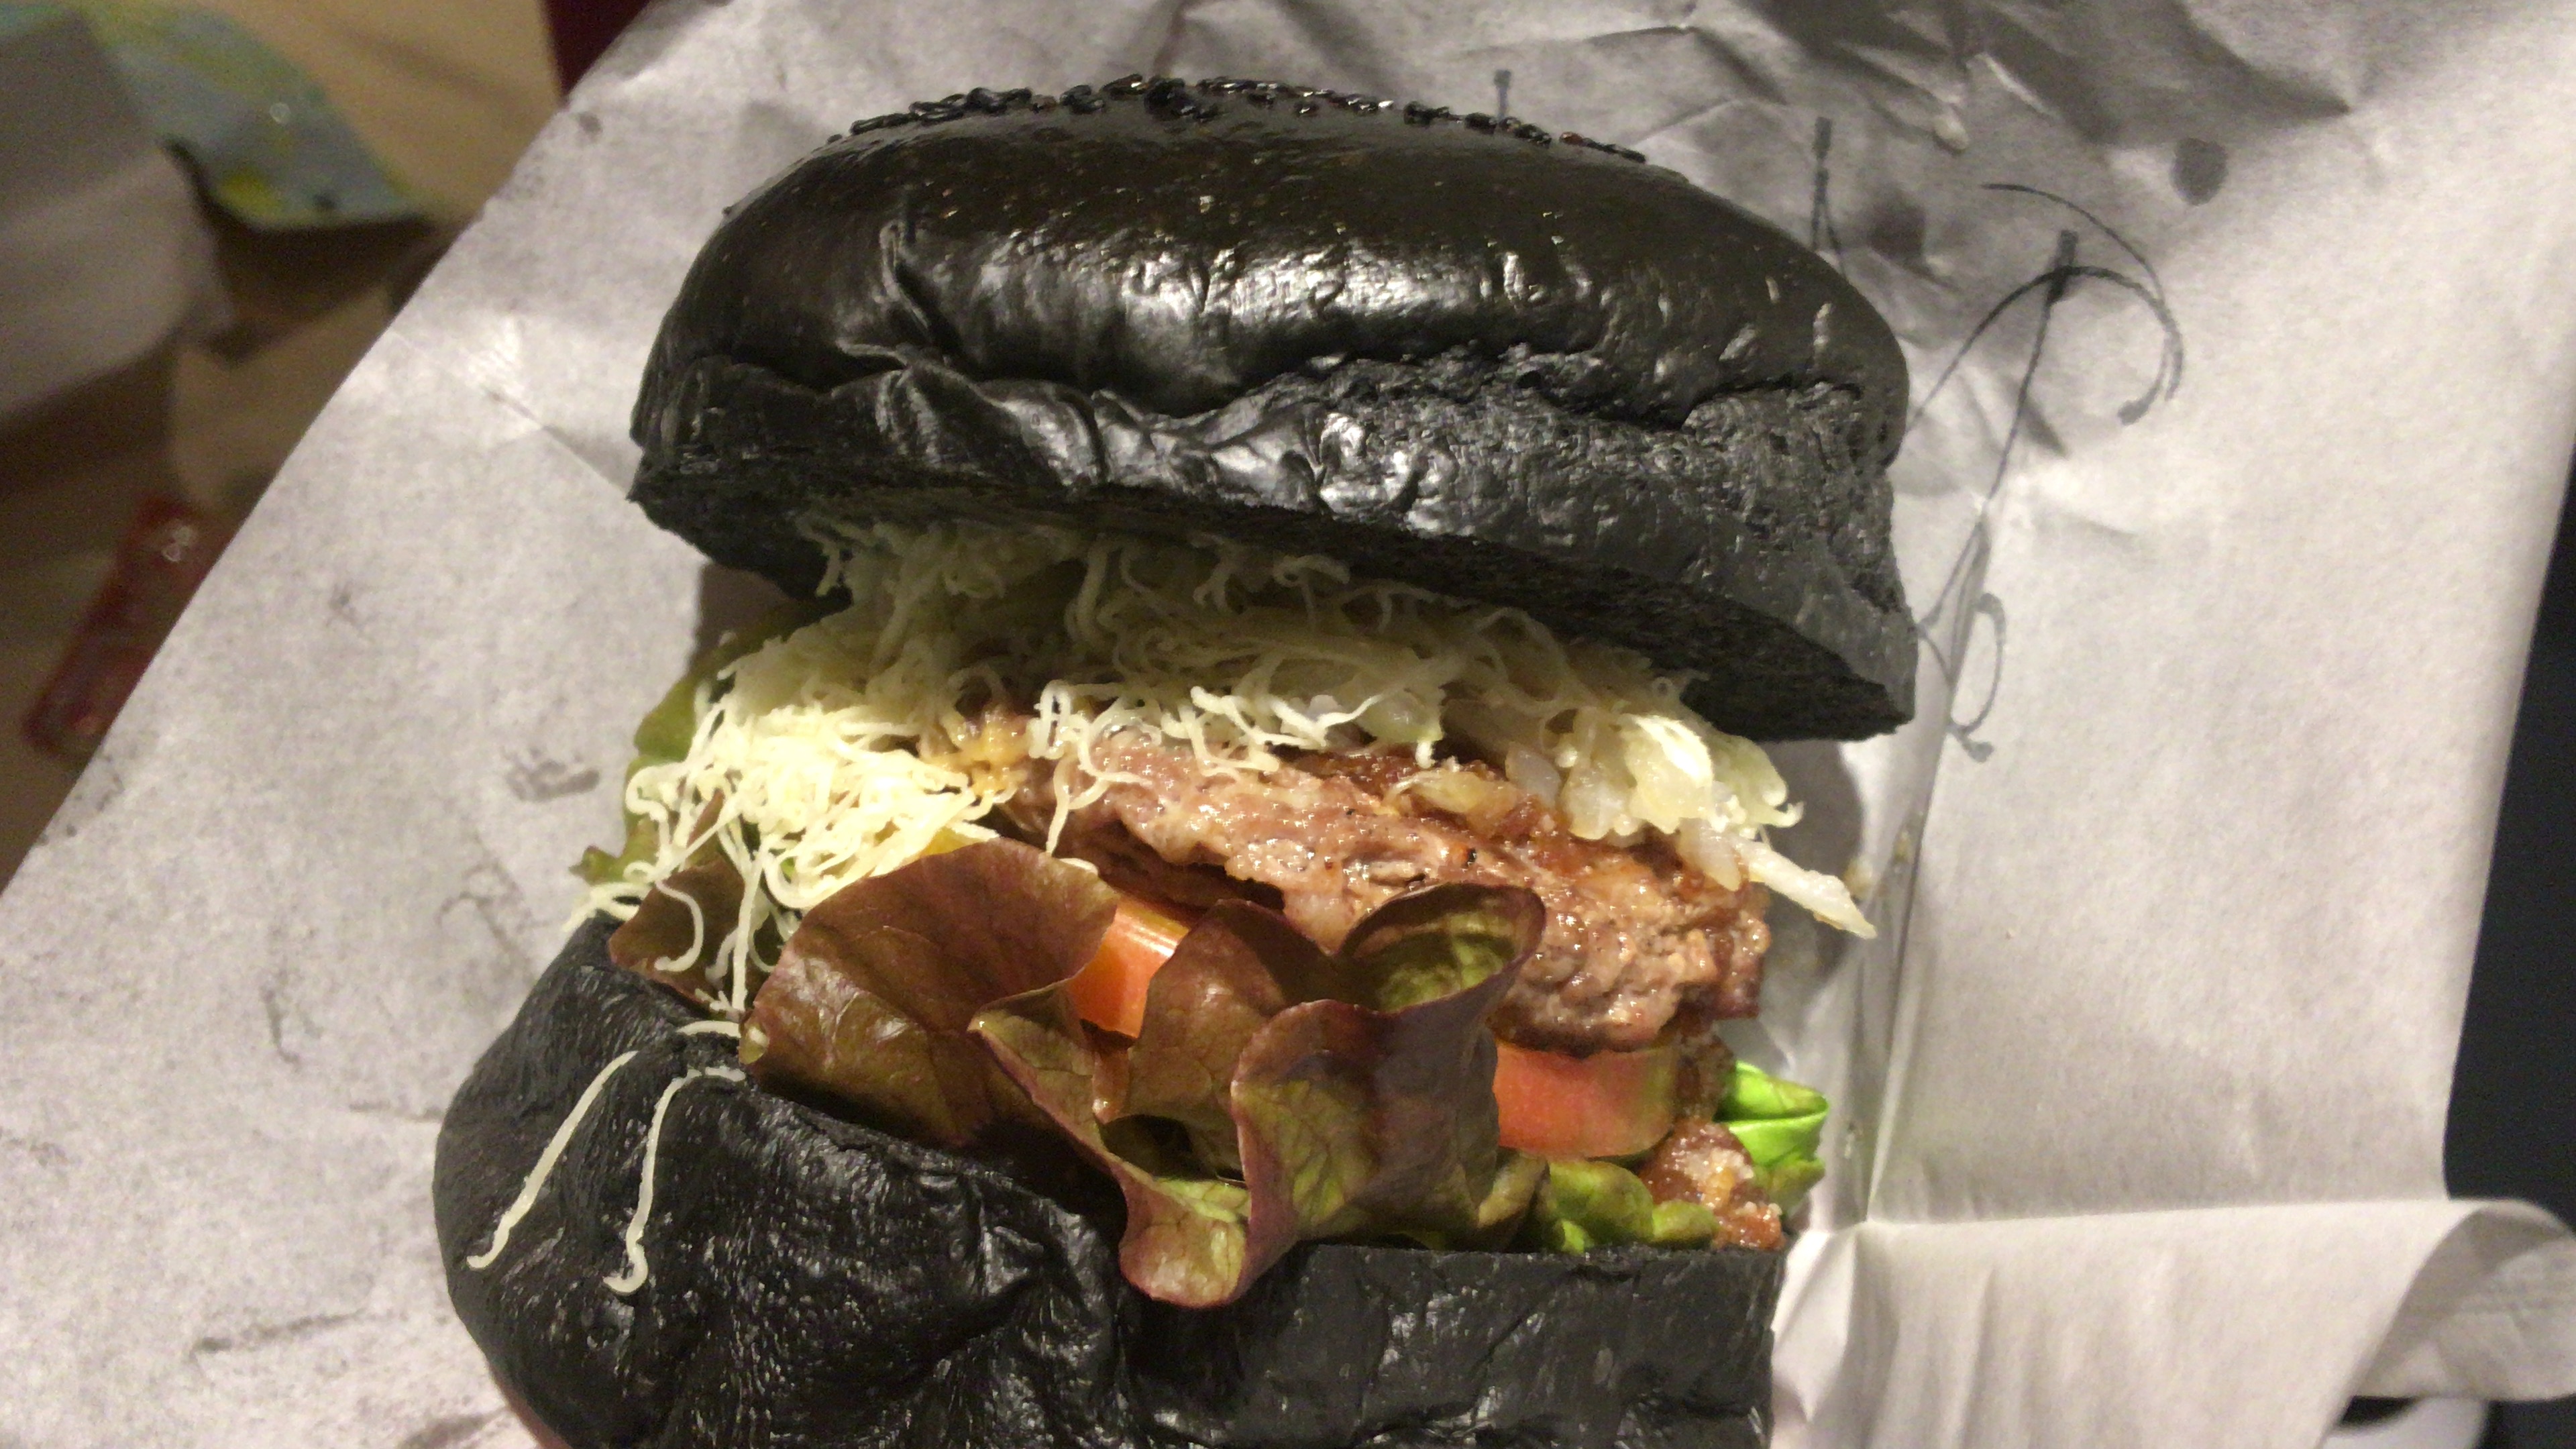 【２０１７】Mebukiのハンバーガーが松崎しげるより黒かった【鹿児島のハロウィン】